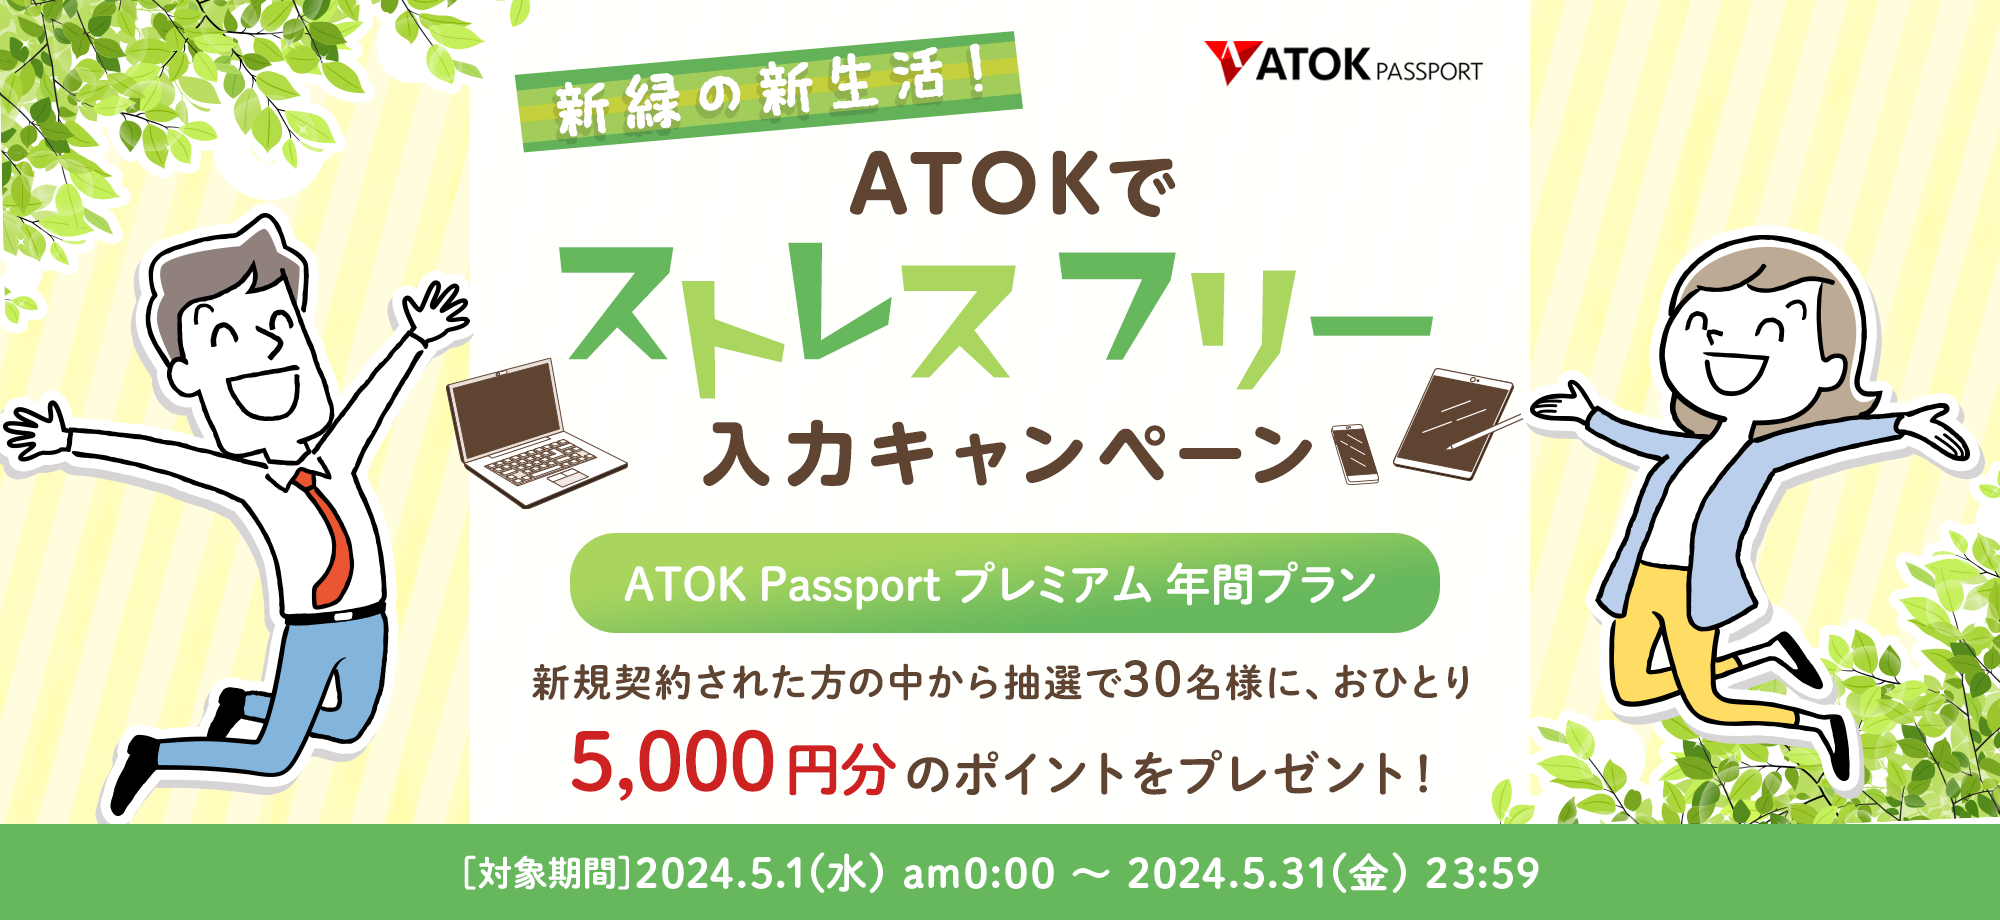 「ATOK Passport 新緑の新生活・ATOKでストレスフリー入力キャンペーン」【対象期間】2024年5月1日（水）am00:00～2024年5月31日（金）23:59